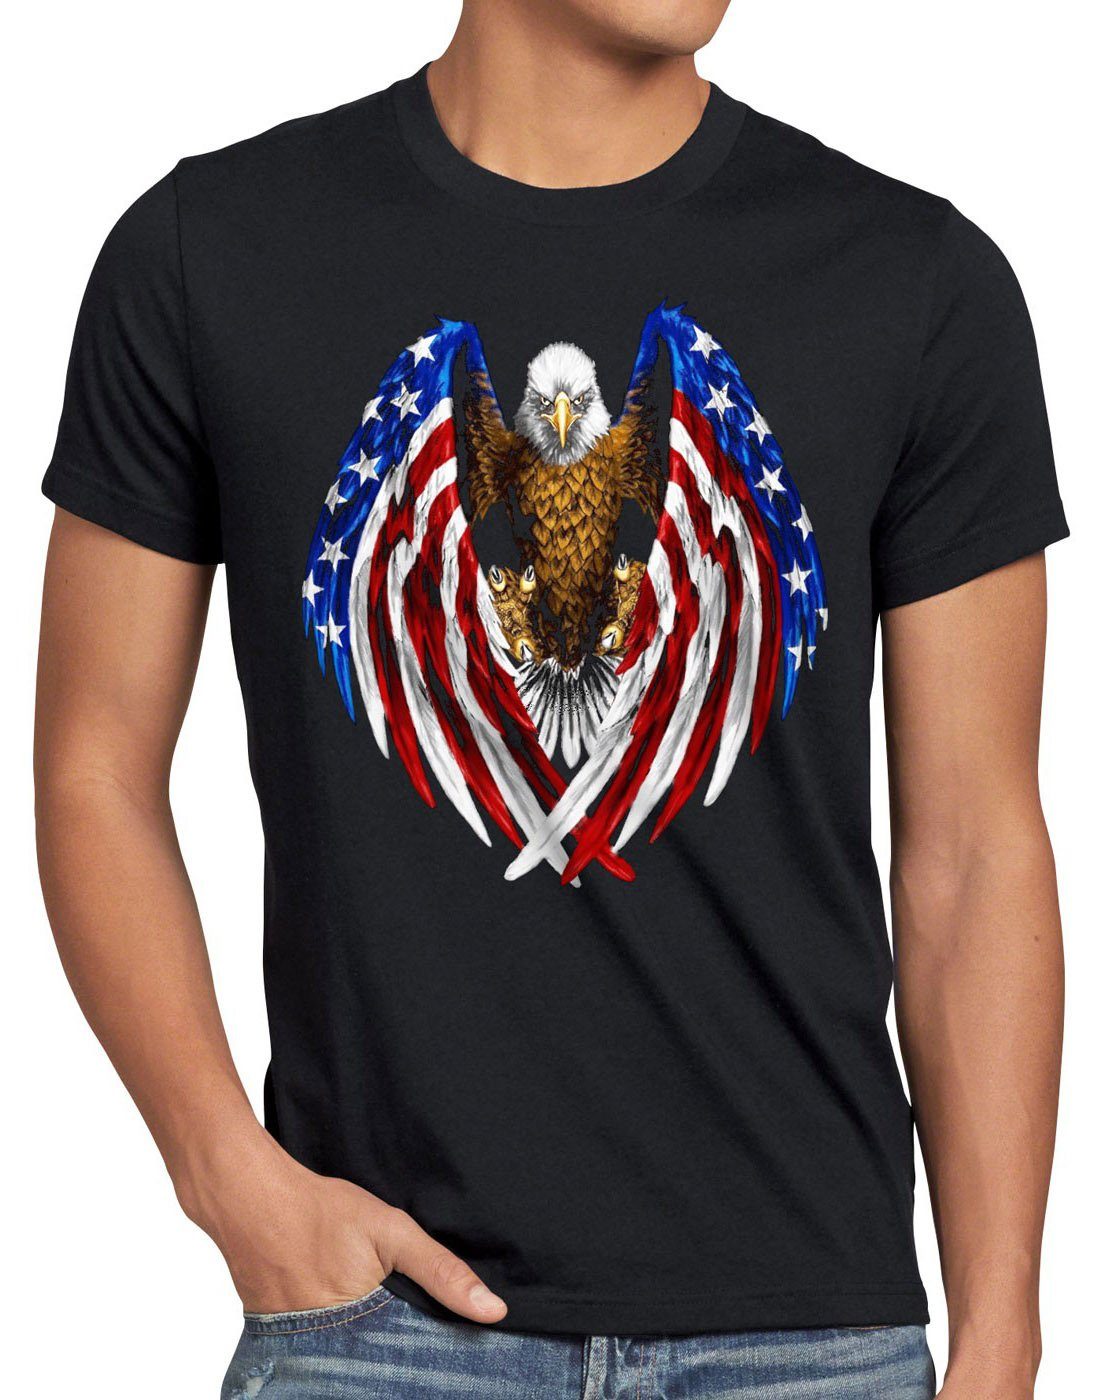 Print-Shirt 4. stars of Herren schwarz states and US juli unites T-Shirt adler stripes flagge style3 usa america